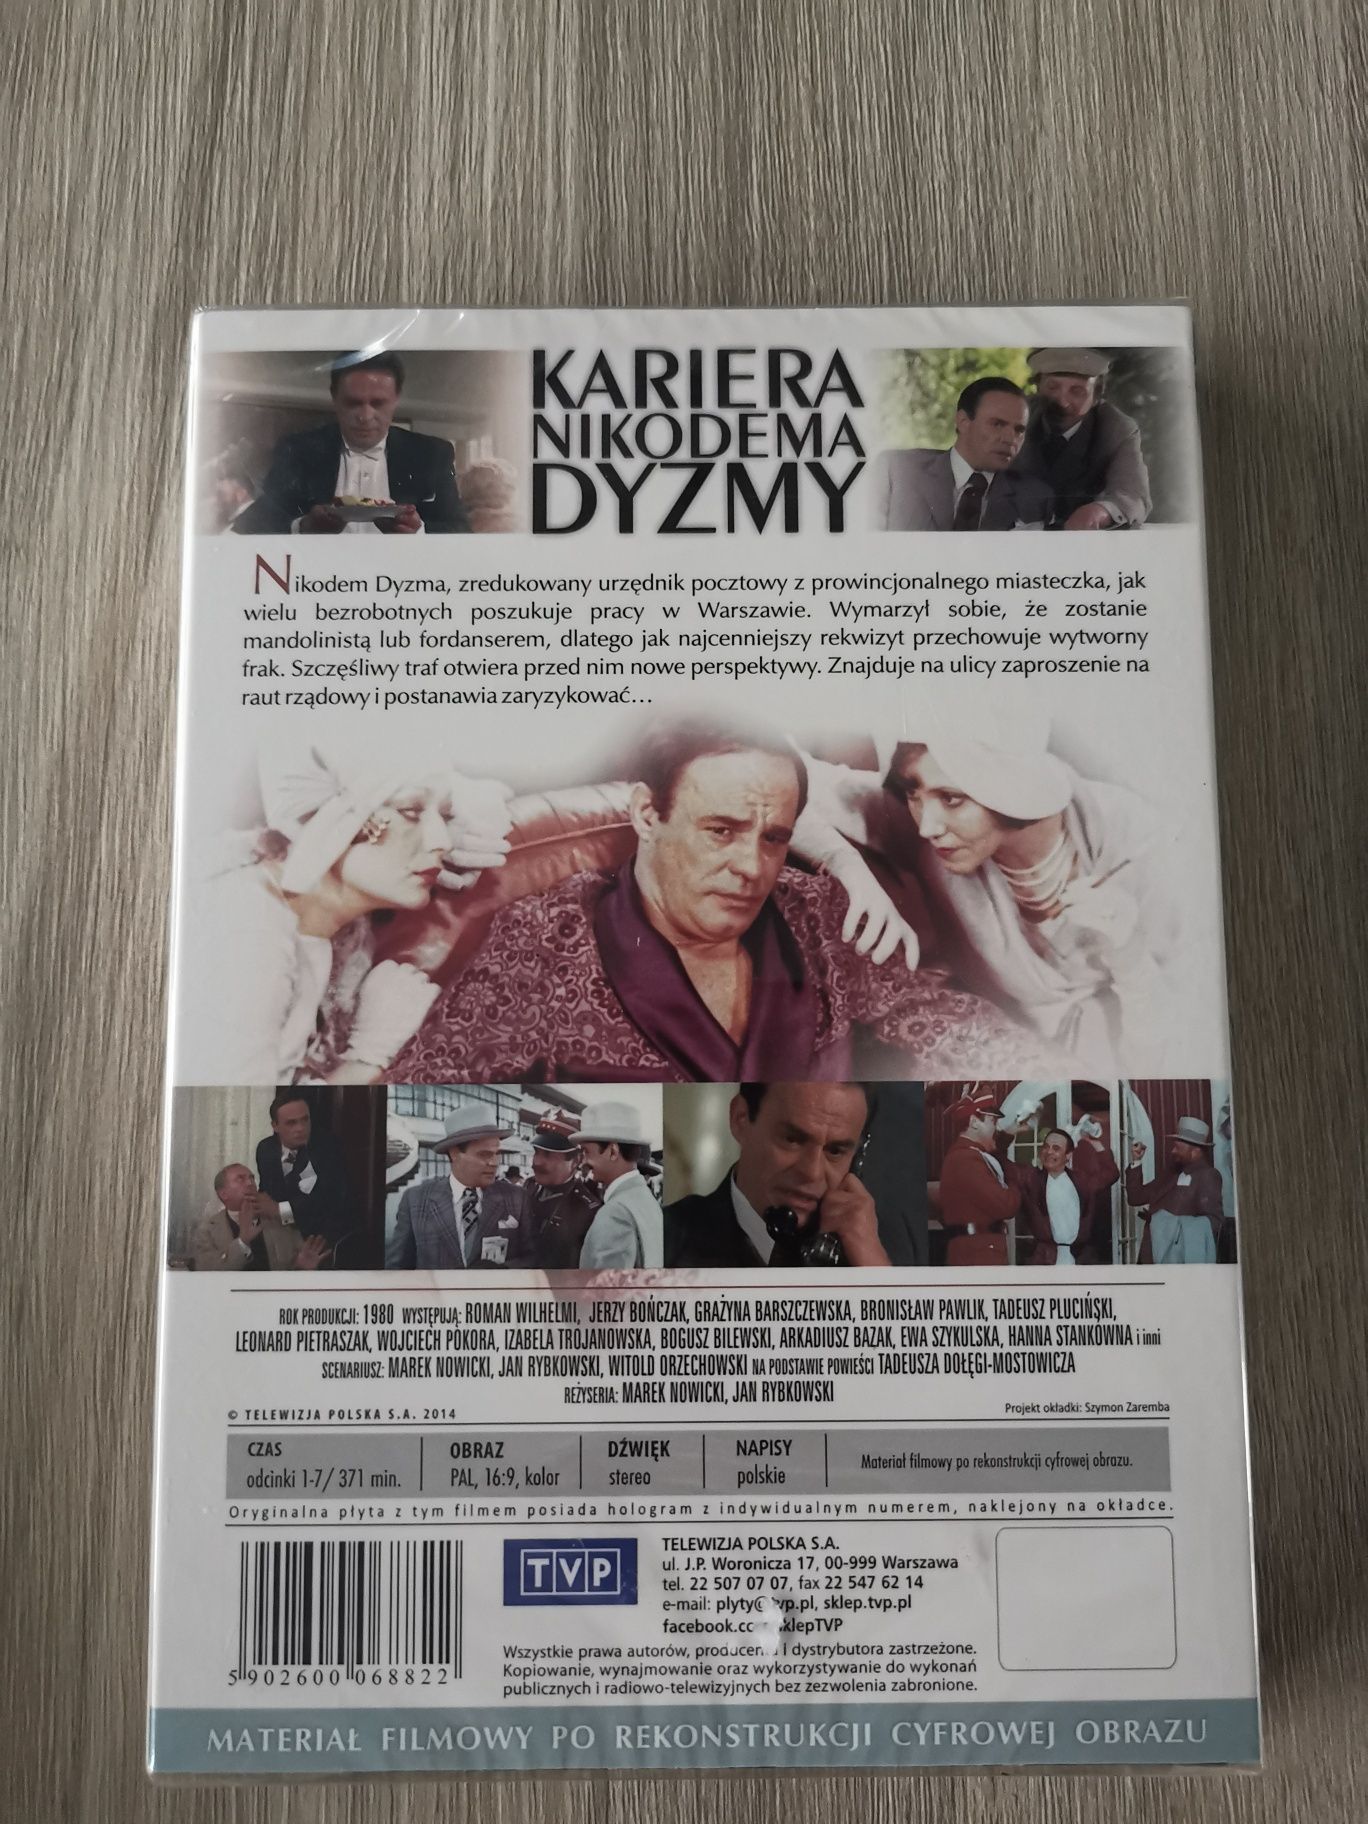 Film Dvd Kariera Nikodema Dyzmy